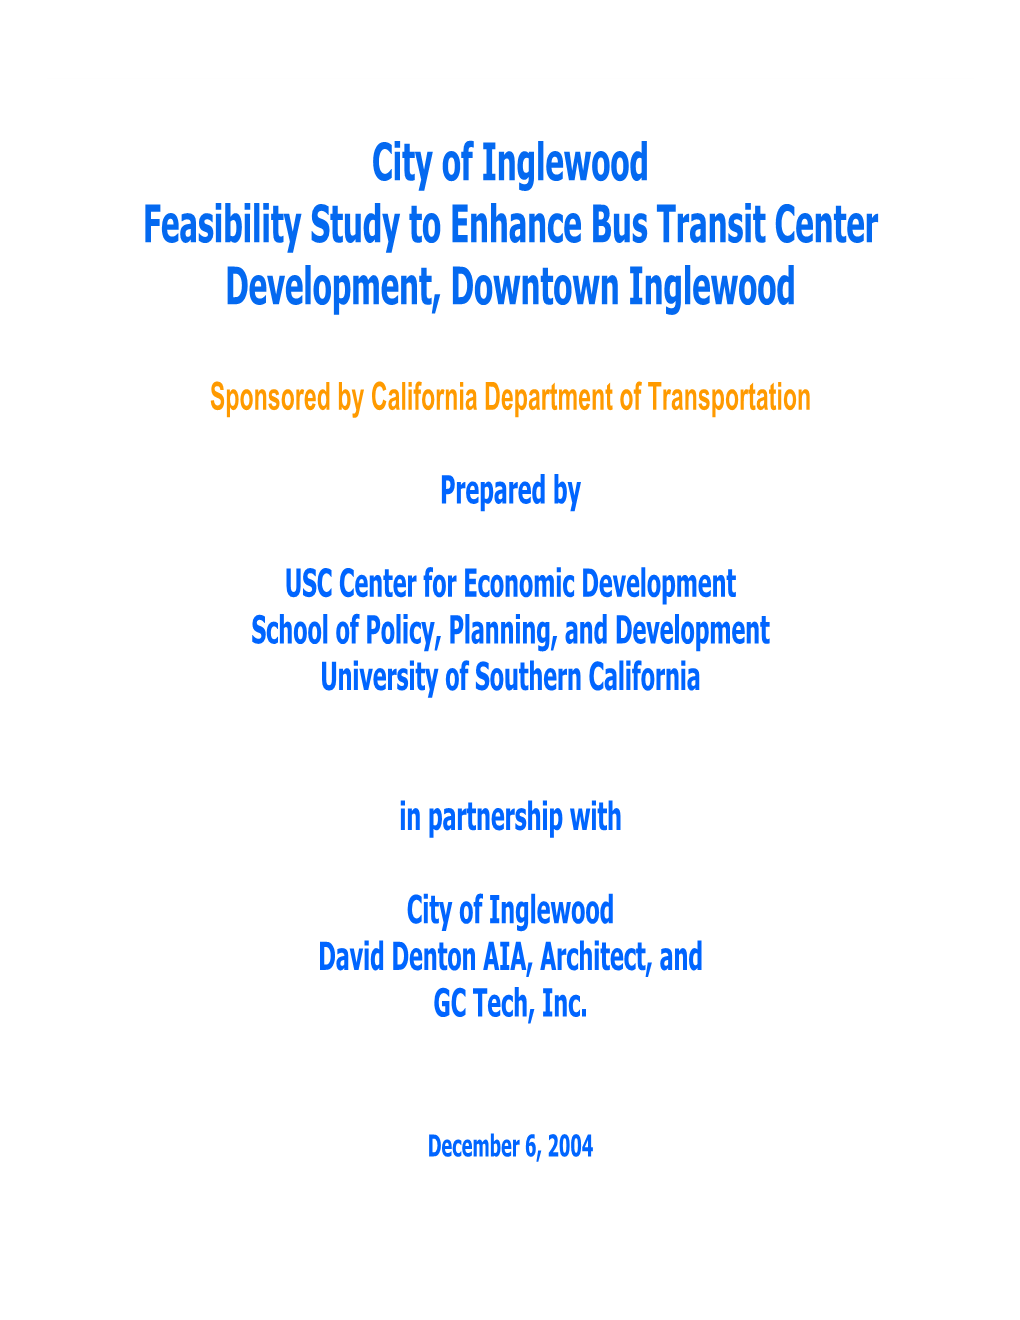 City of Inglewood Feasibility Study to Enhance Bus Transit Center Development, Downtown Inglewood